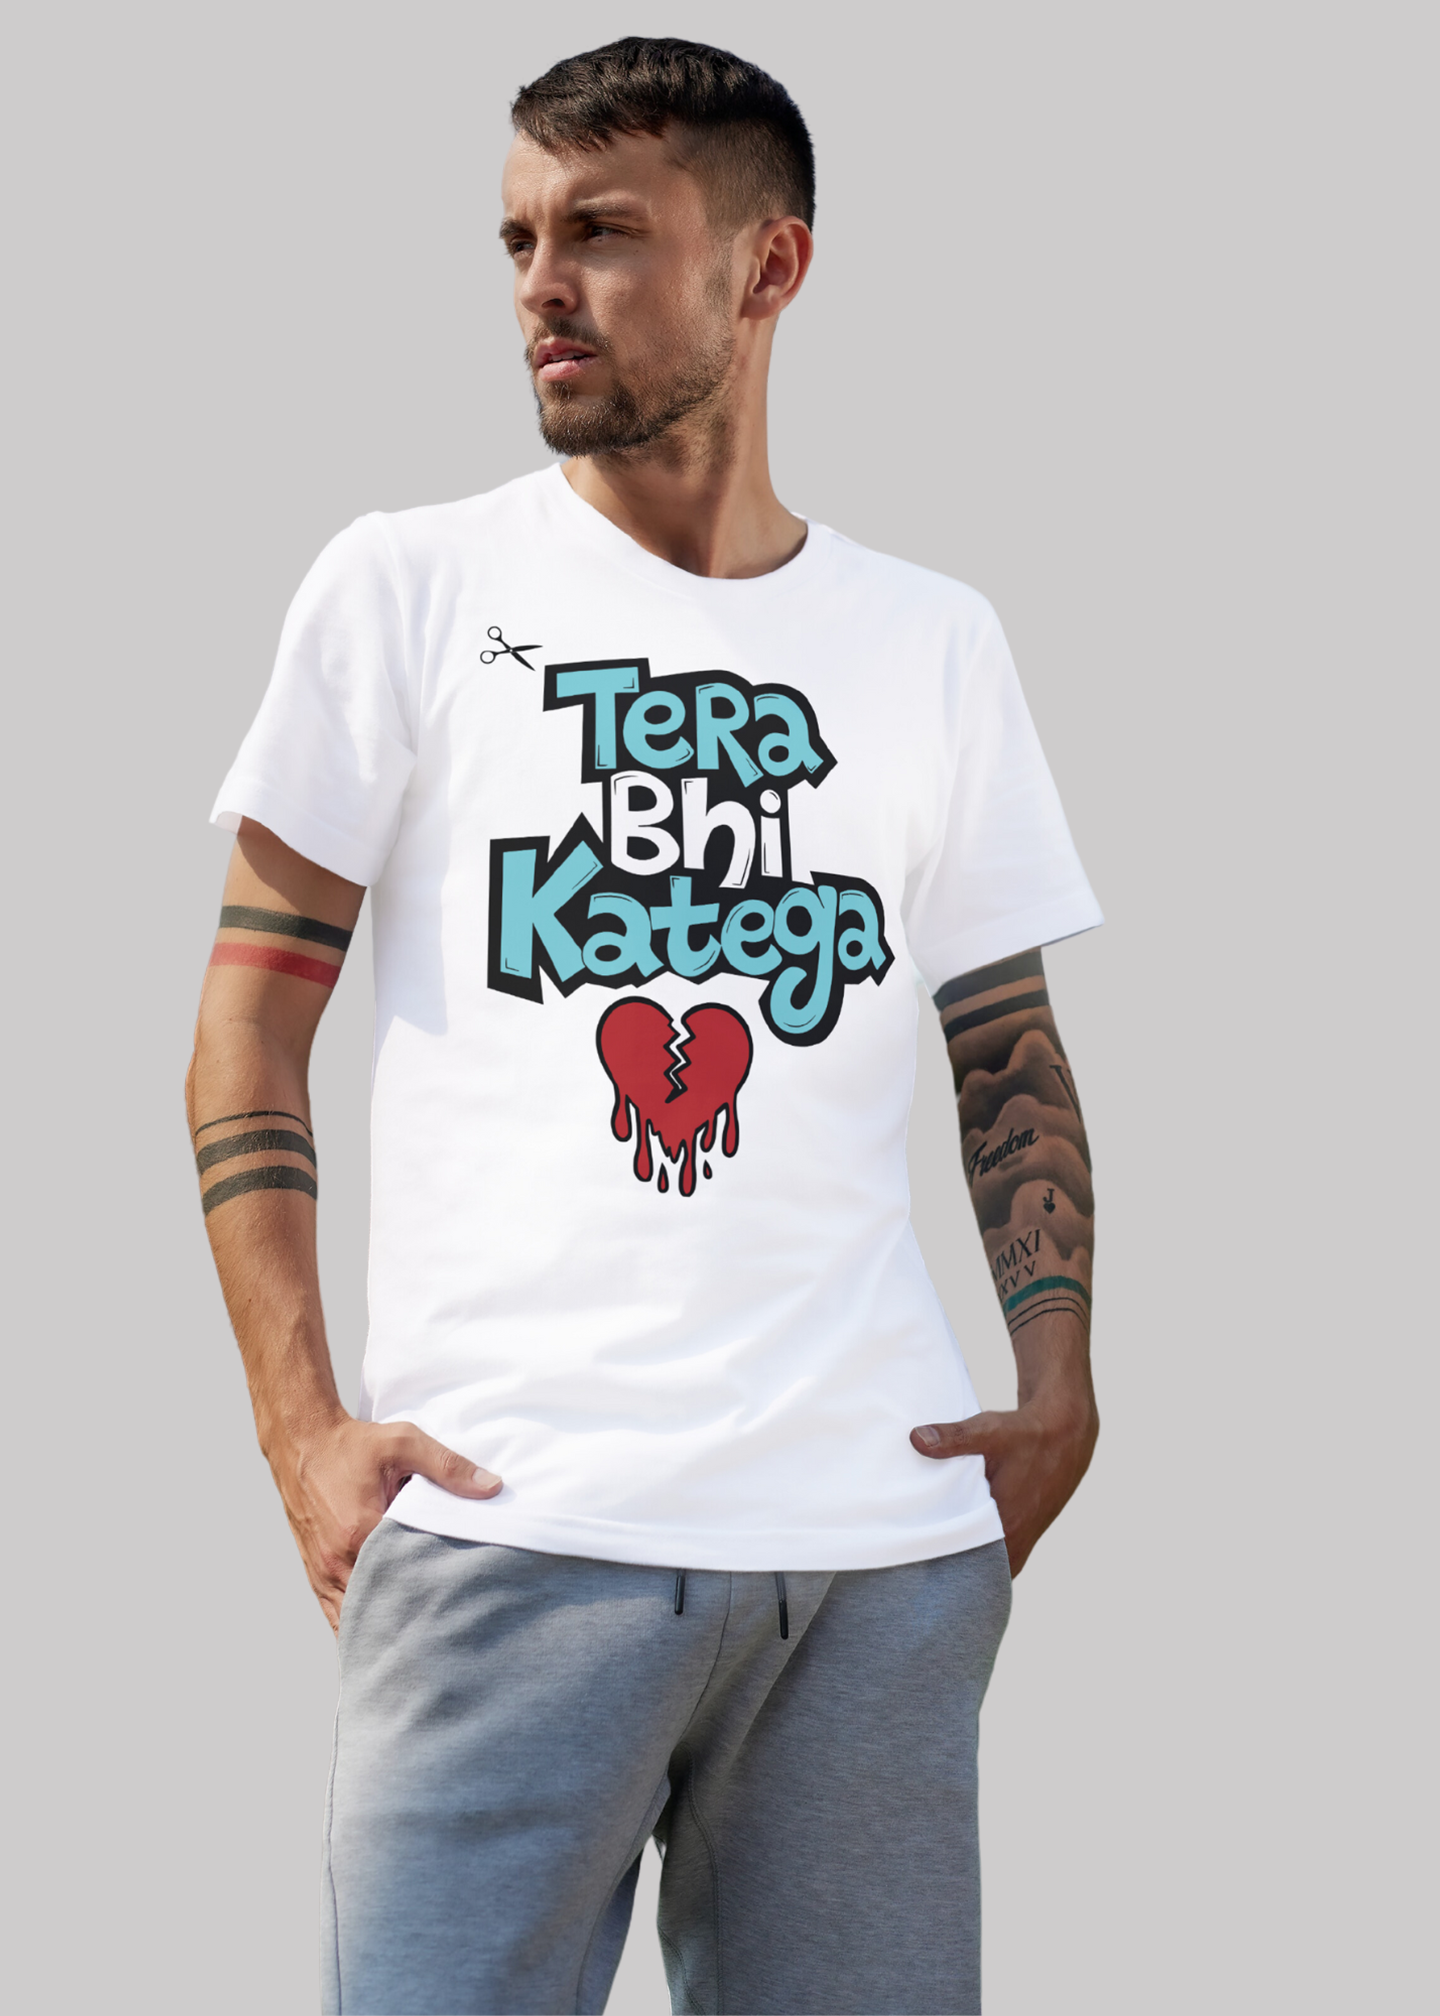 Tera bhi katega Printed Half Sleeve Premium Cotton T-shirt For Men